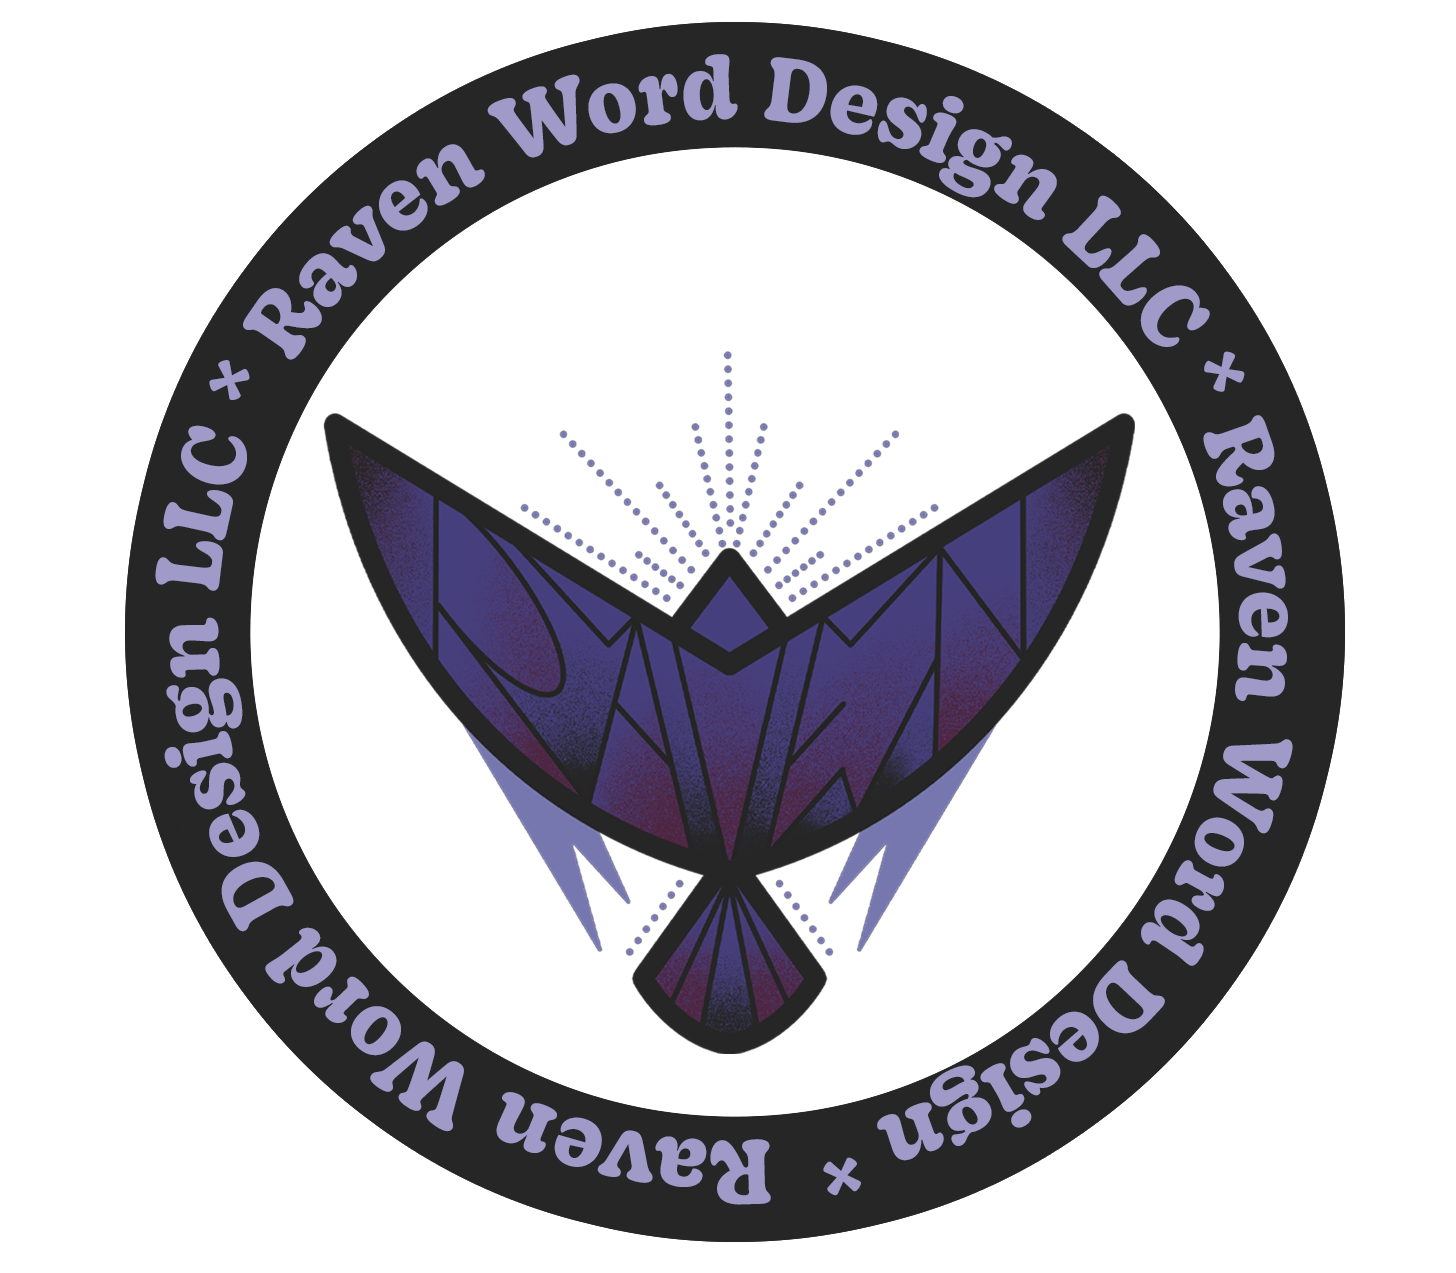 Raven Word Design LLC